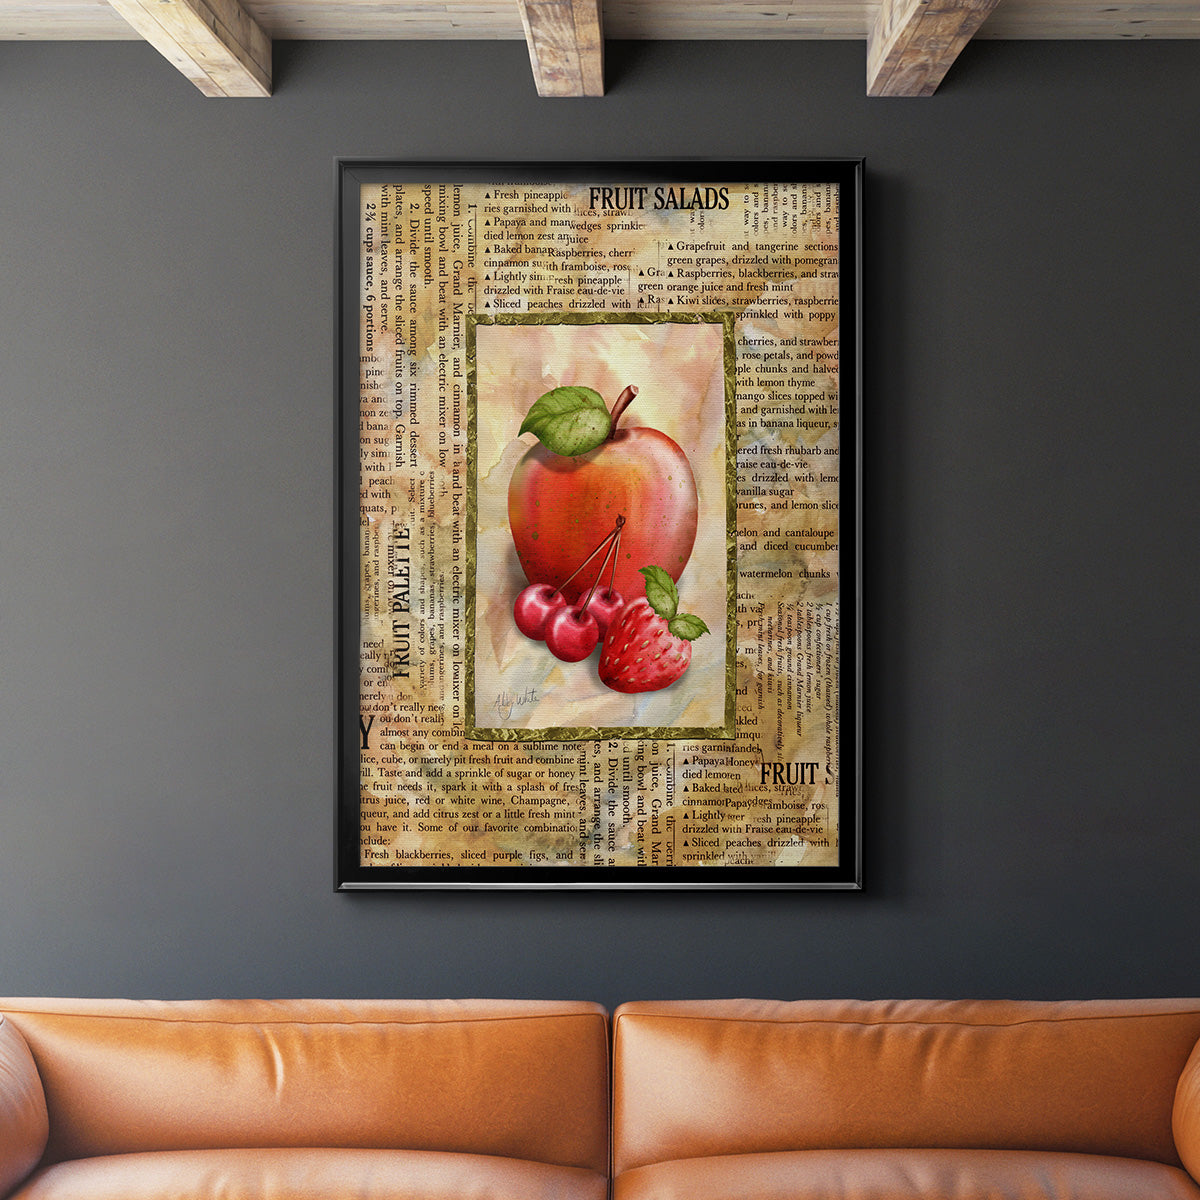 Mixed Fruit I Premium Framed Print - Ready to Hang